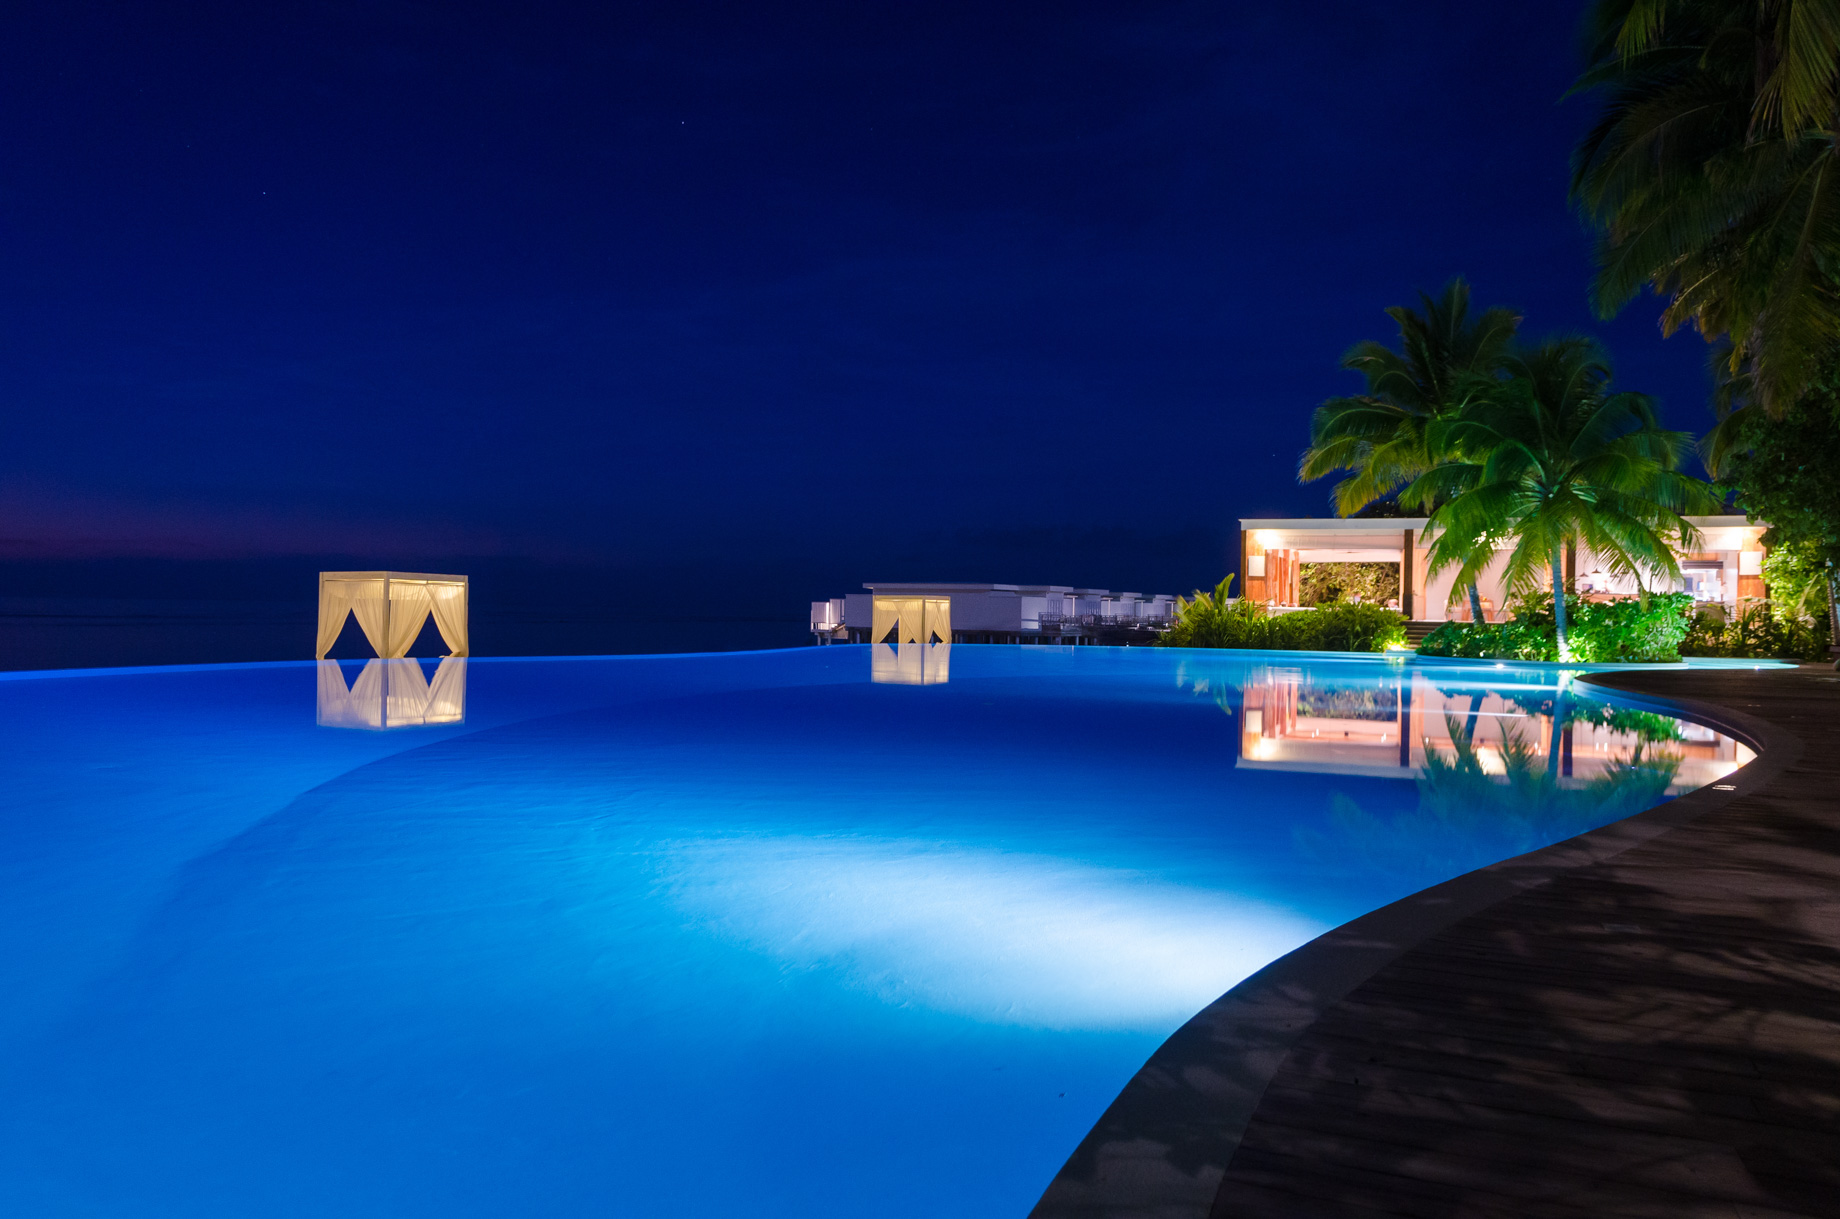 Amilla Fushi Resort and Residences - Baa Atoll, Maldives - Beachfront Infinity Pool Night